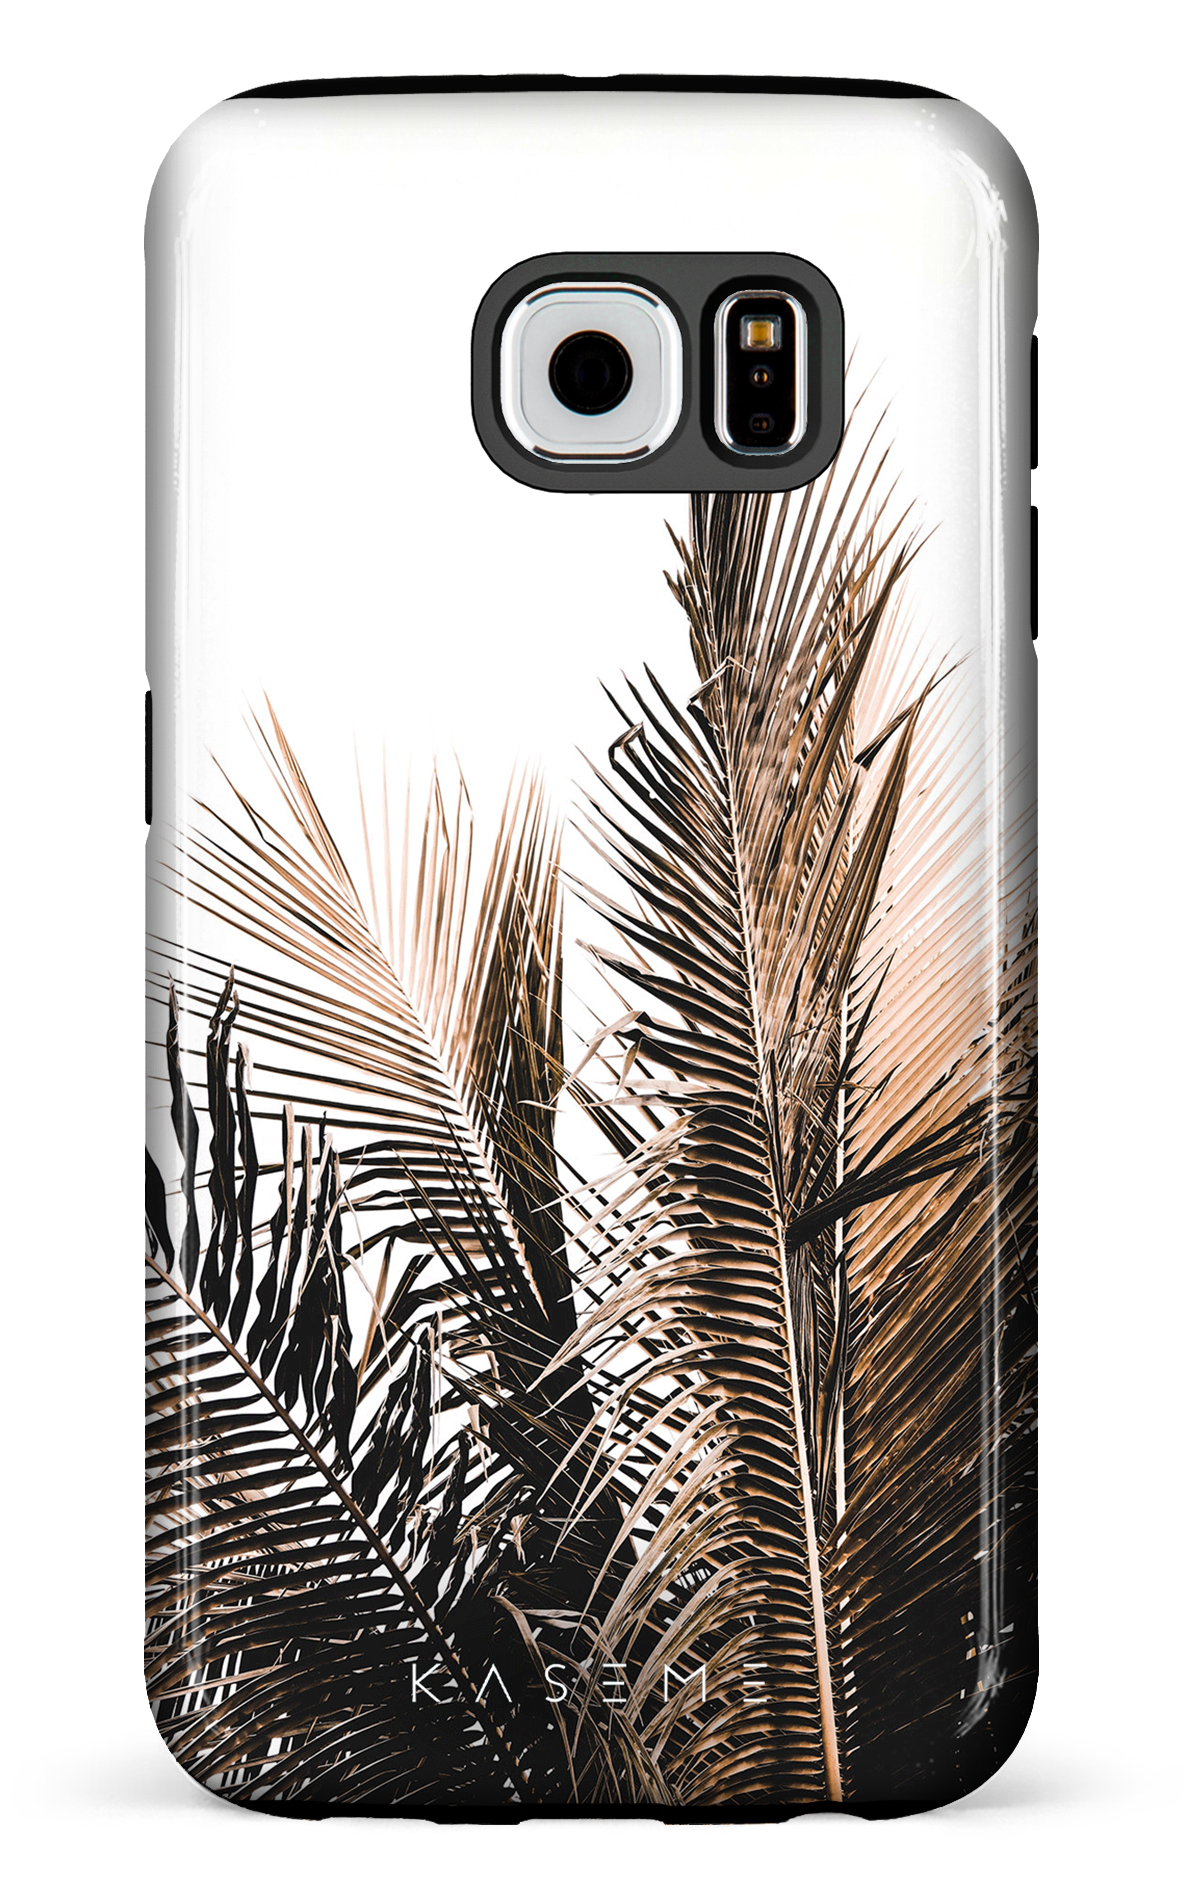 Cali - Galaxy S6